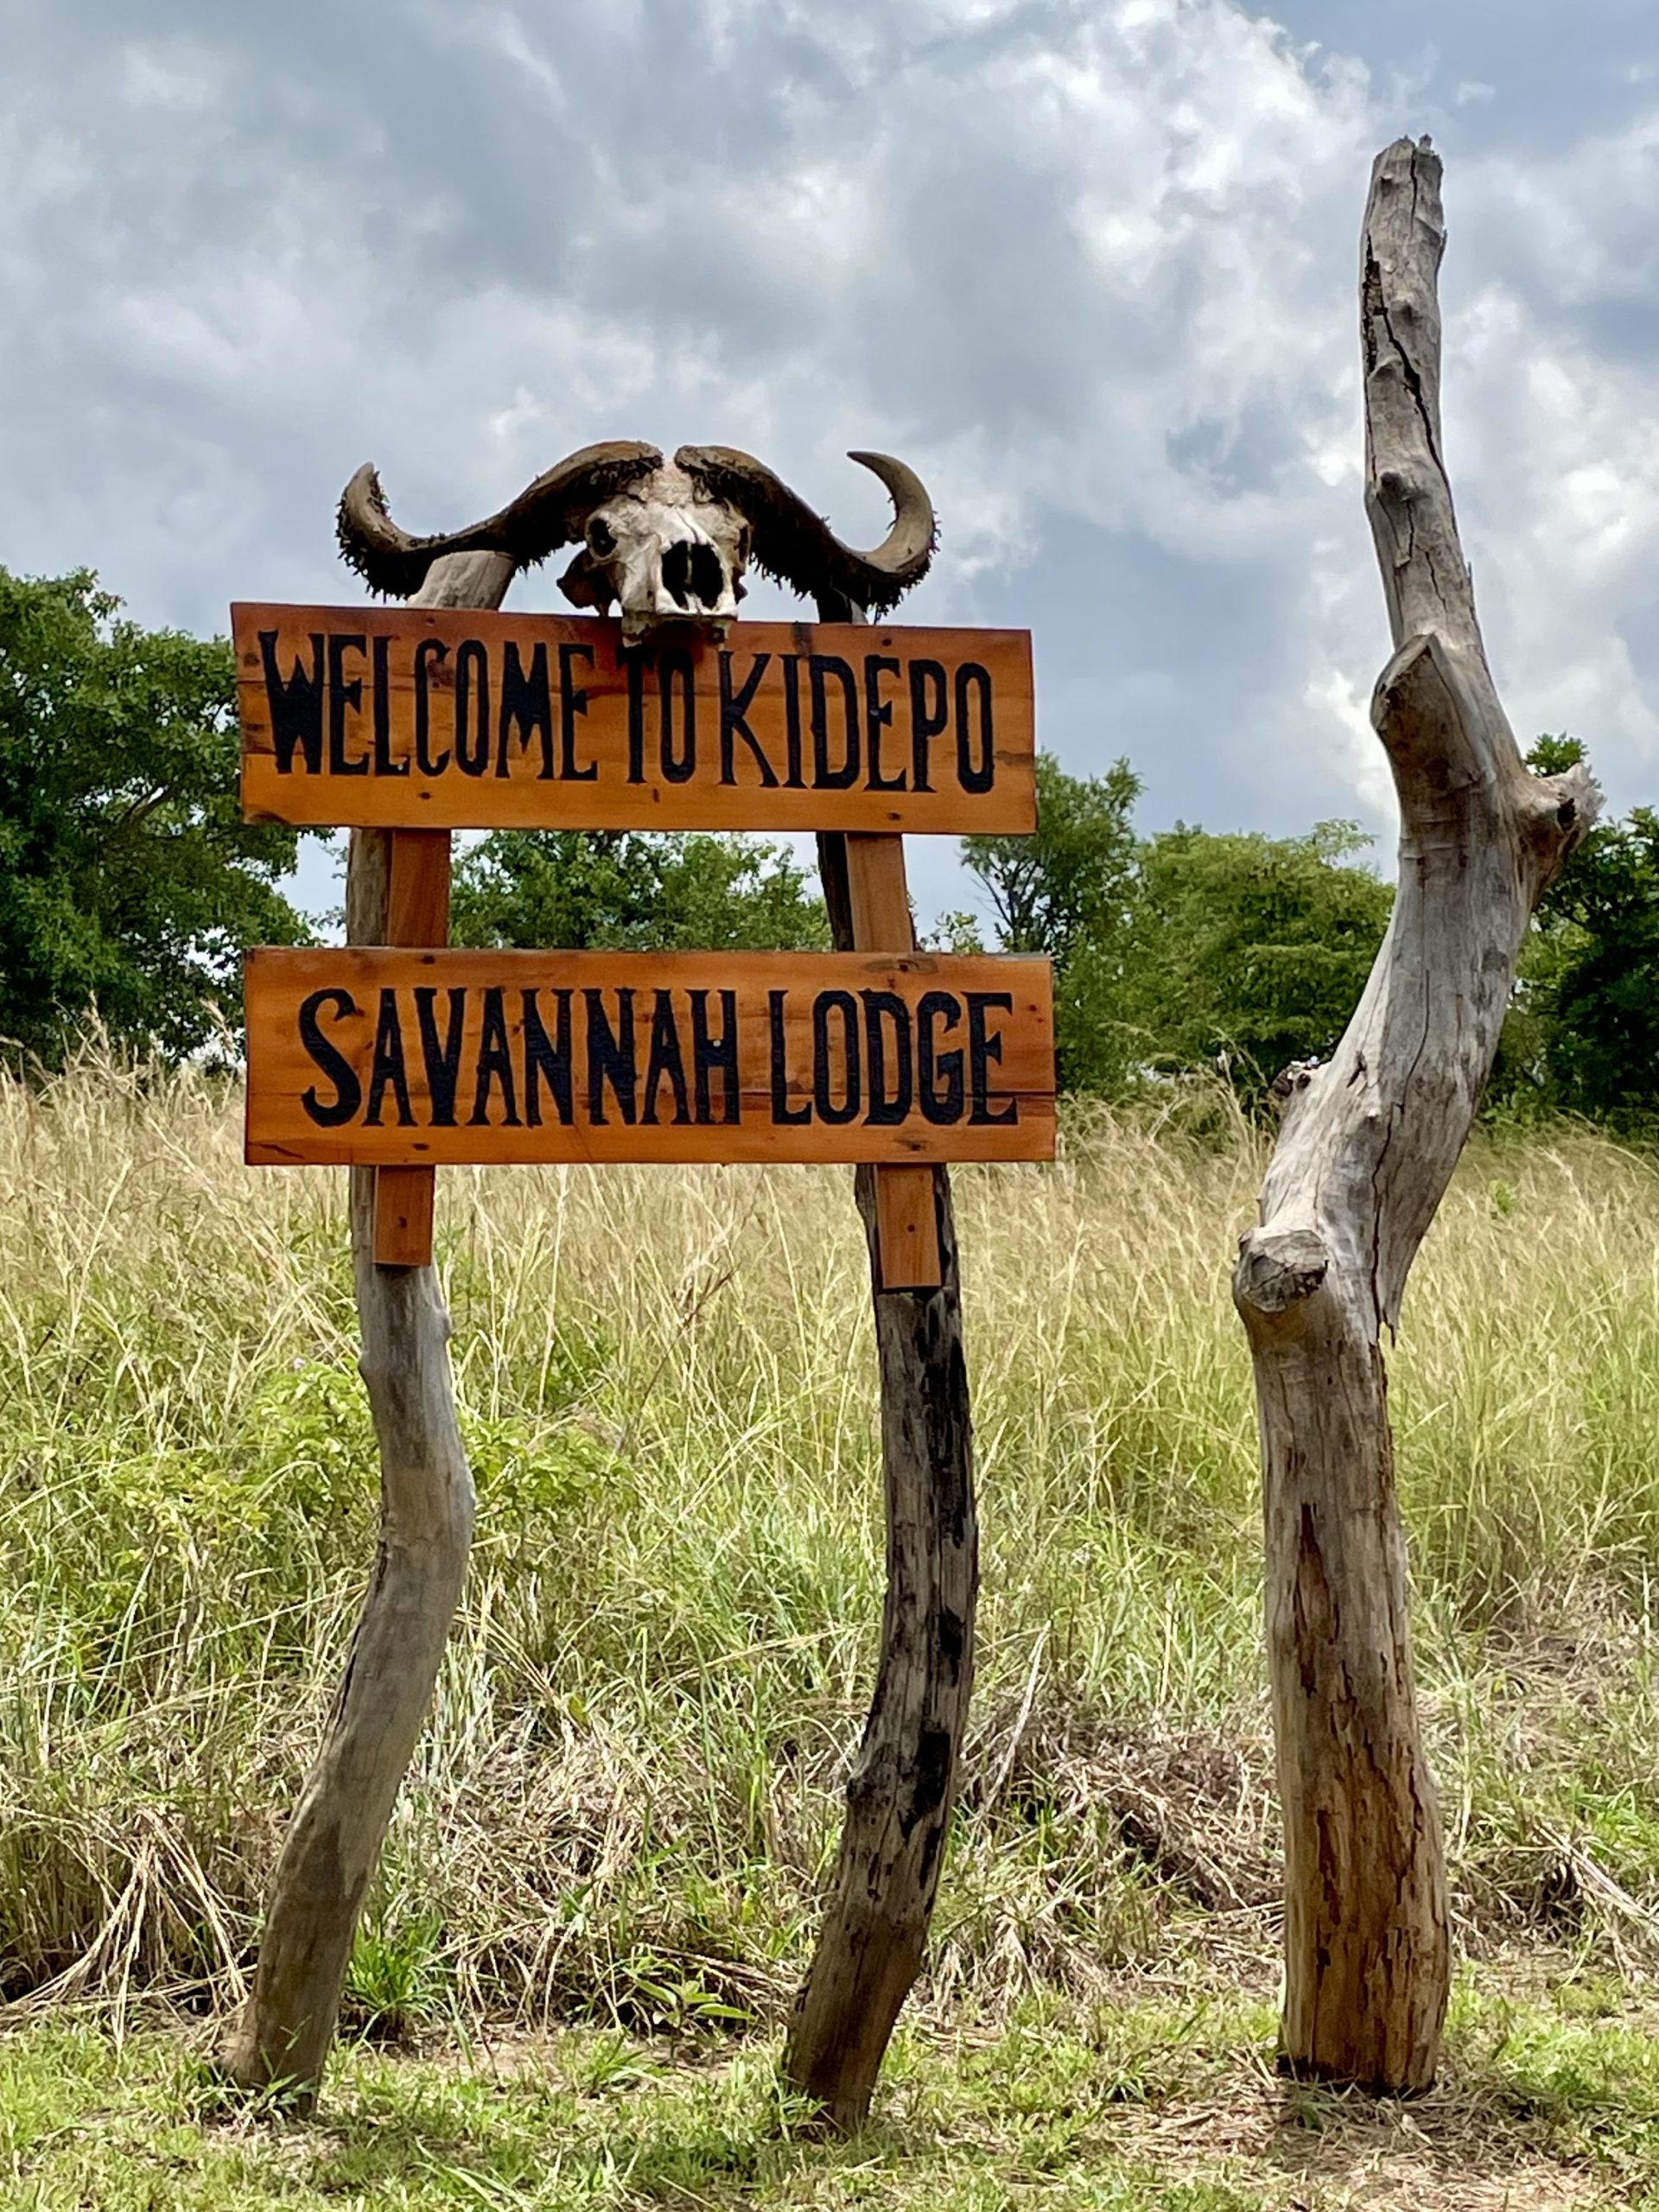 Het fraaie welkomstbord bij de oprit naar Kidepo Savannah Lodge